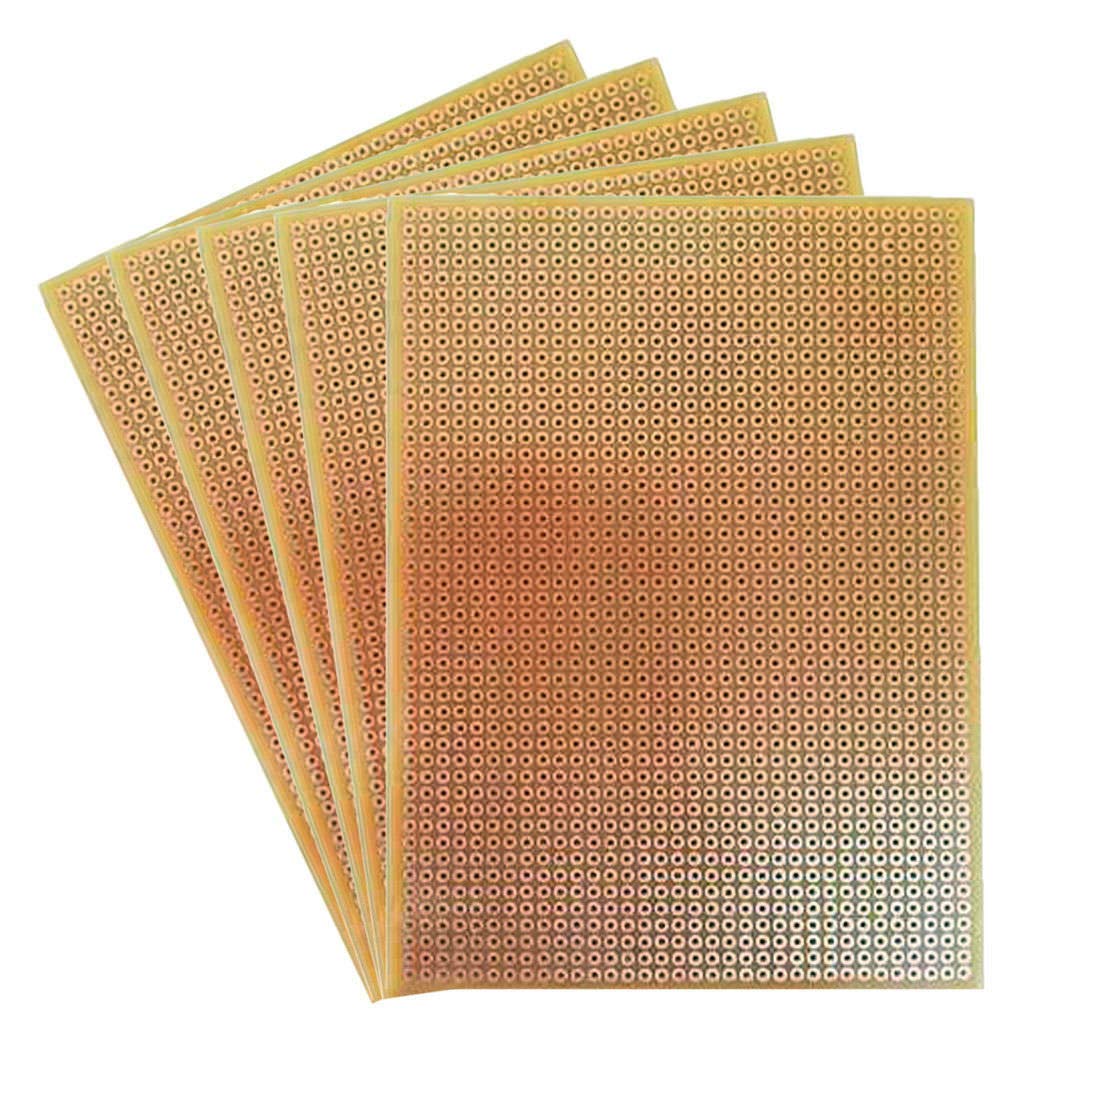 General Purpose Printed Circuit Zero PCB Board of 140 x 90 mm (5 Pieces)